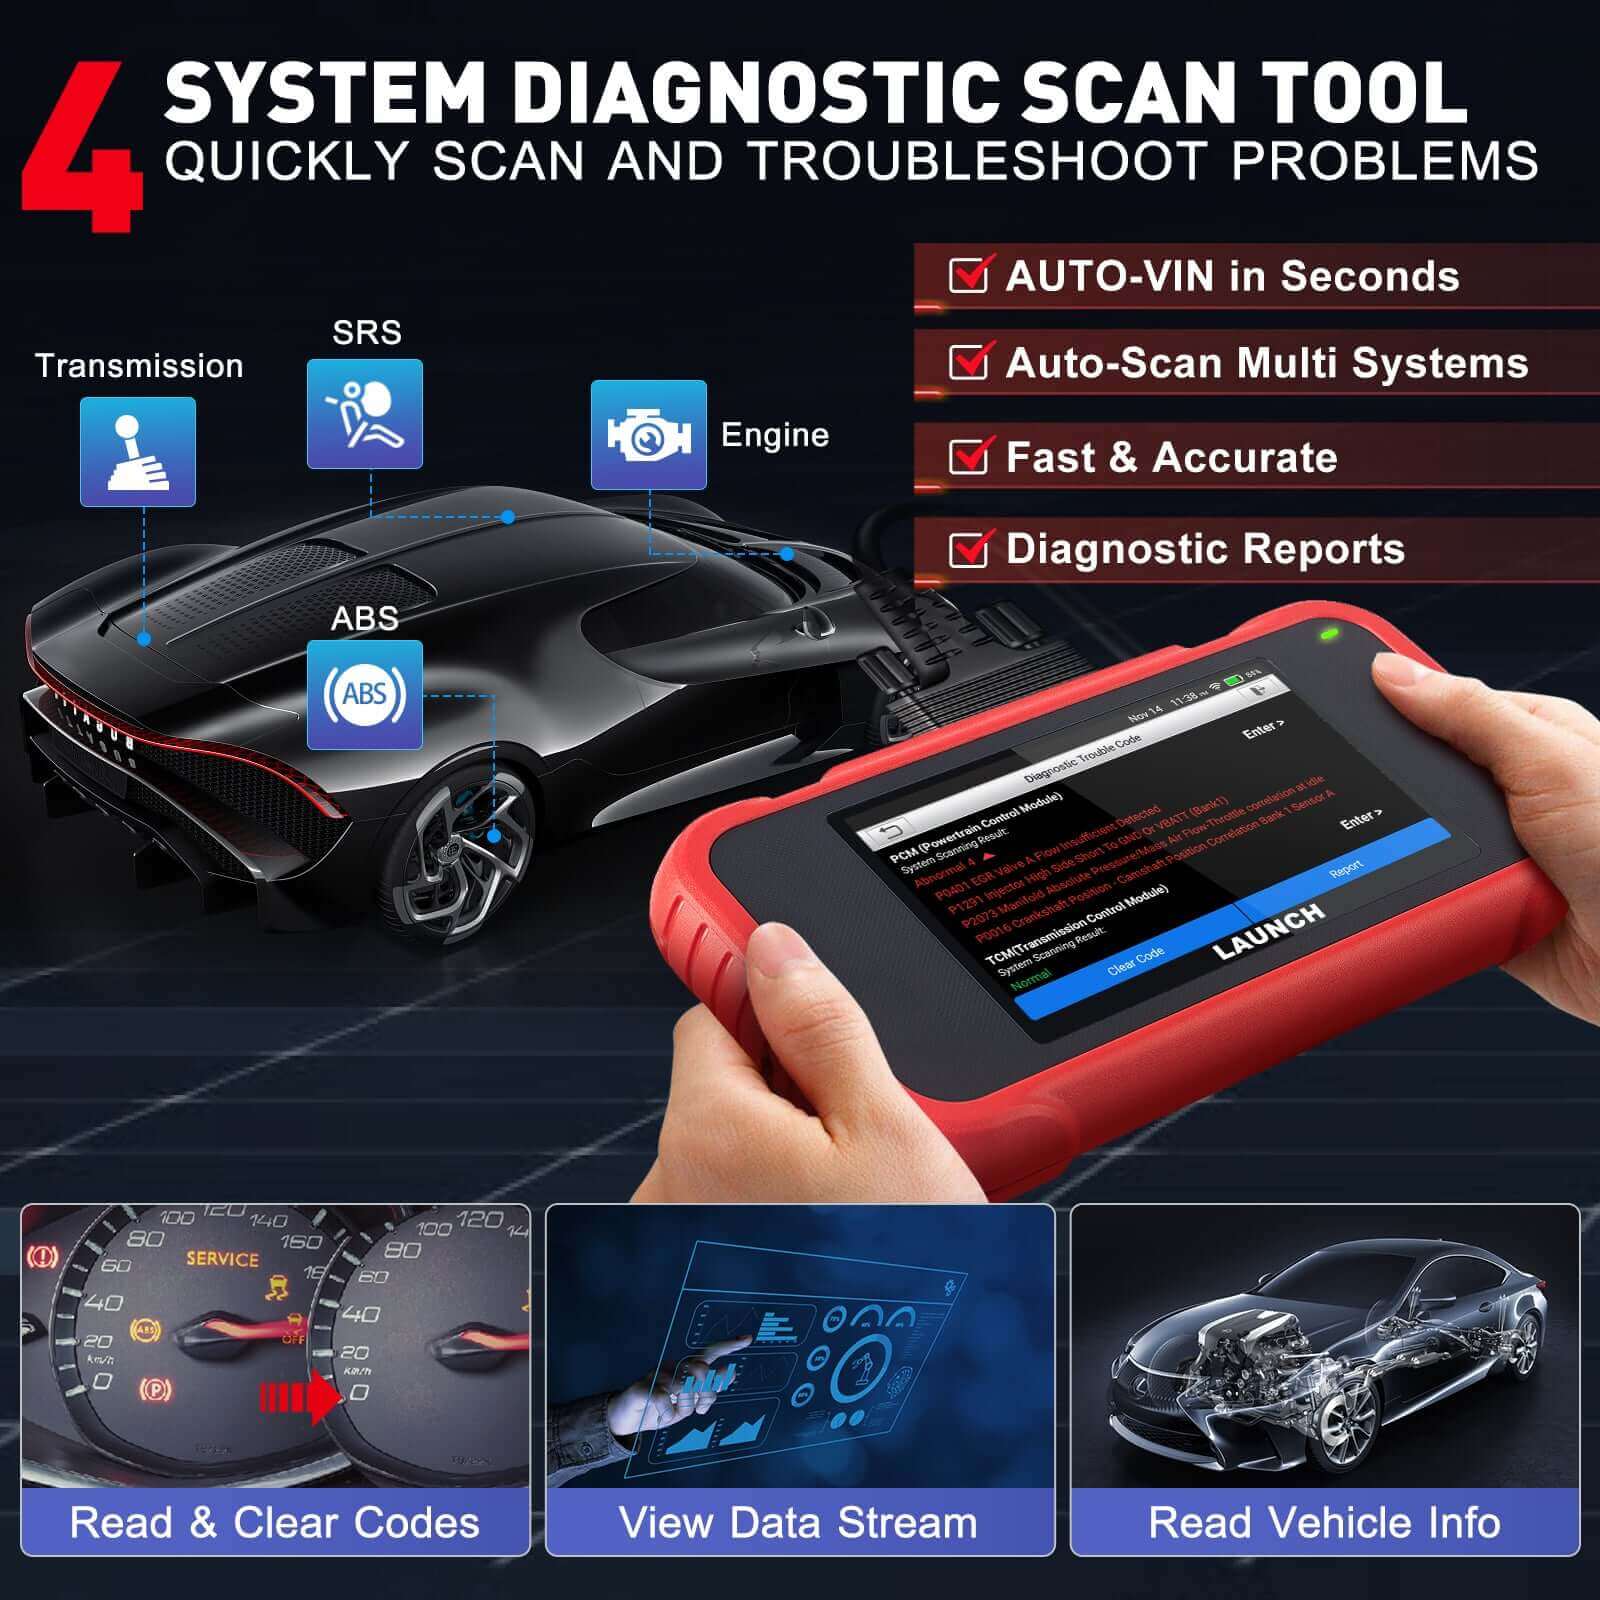 LAUNCH X431 CRP123E V2.0 OBD2 Scanner Car Diagnostic Tools ABS SRS Engine AT 4 System Scanner + 7 Reset Free Update